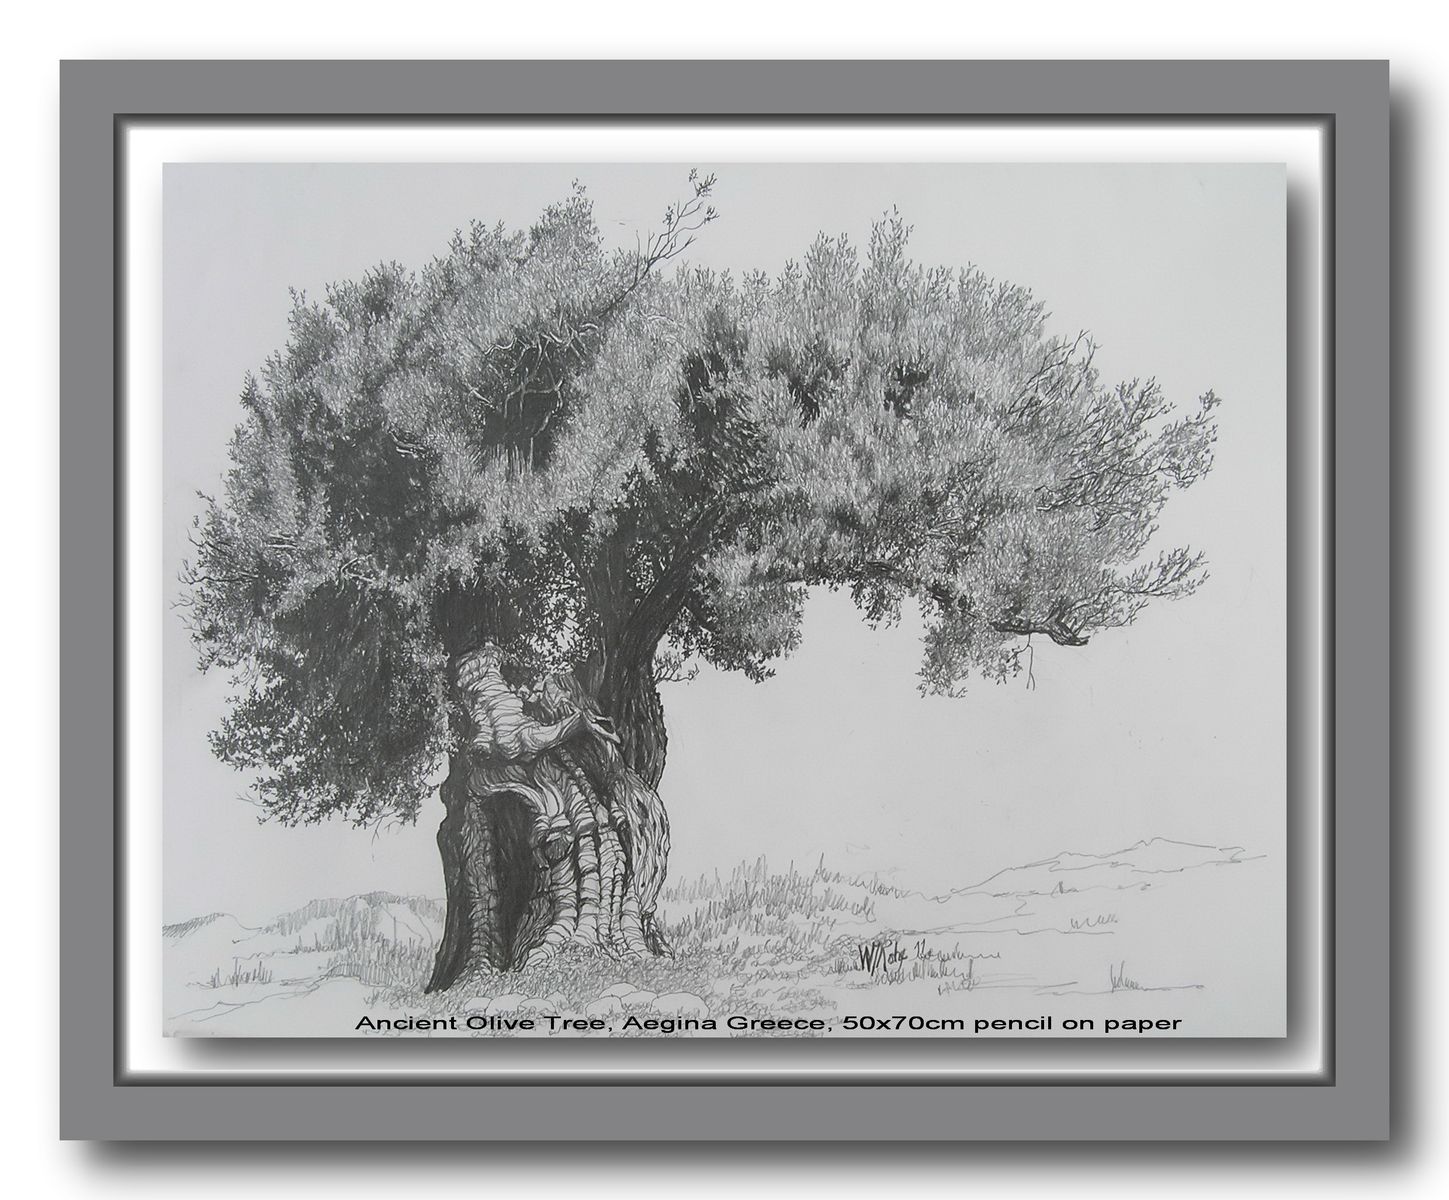 Ancient Olive Tree, Aegina, Greece